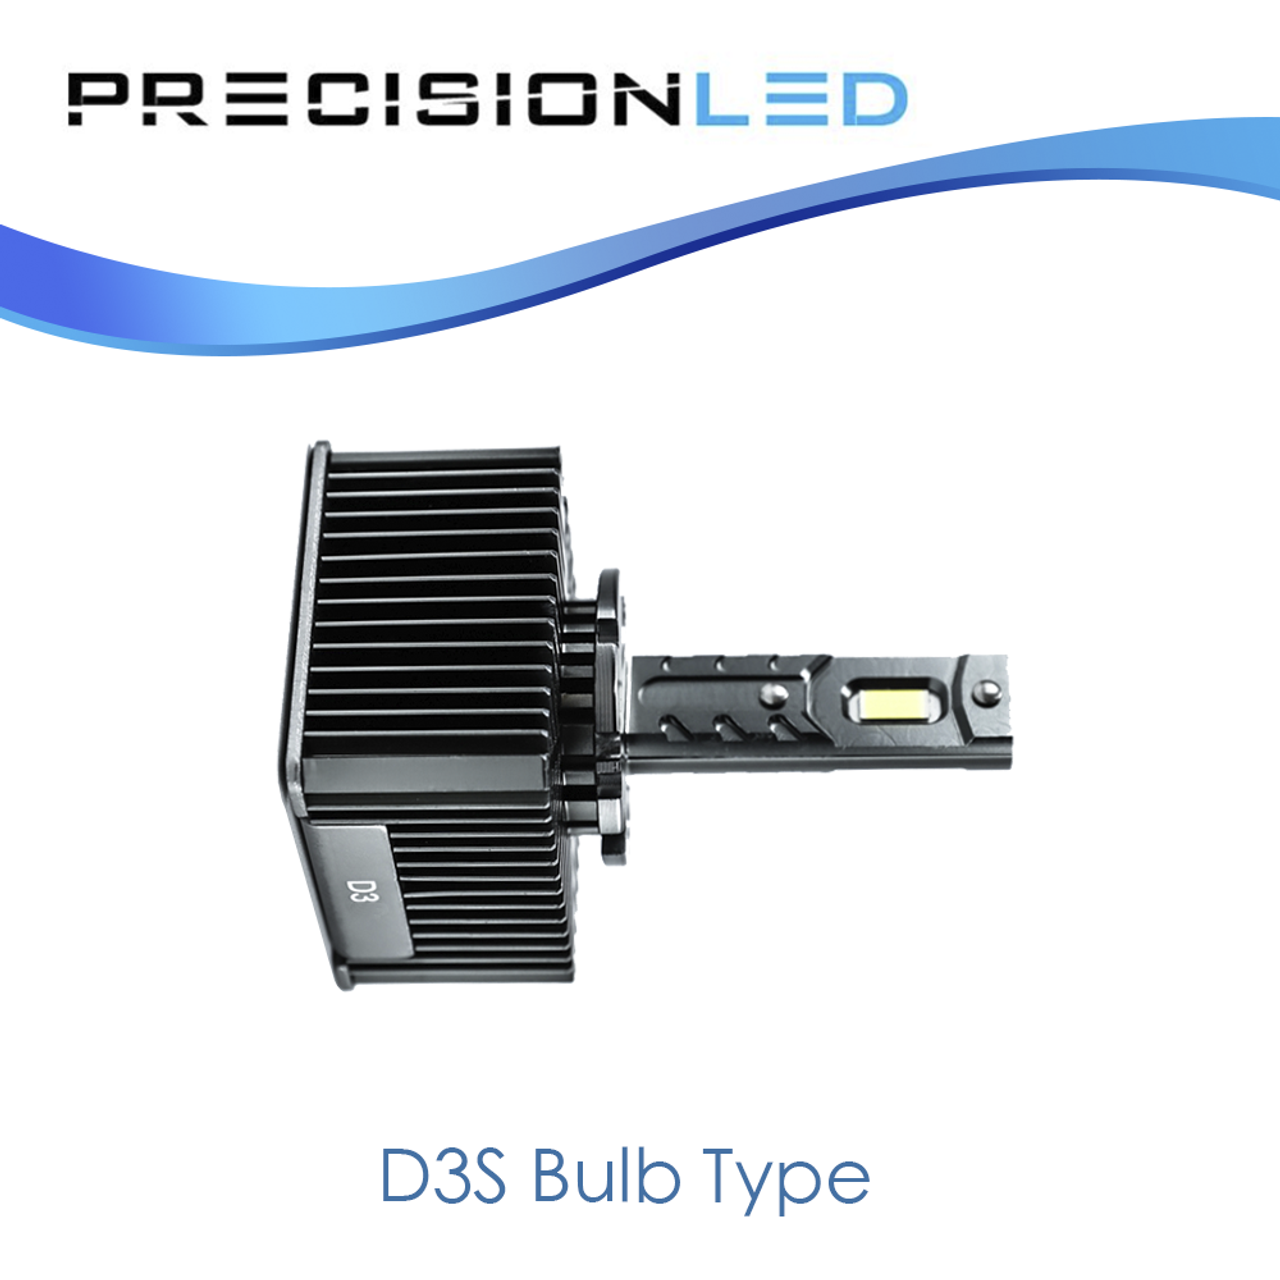 M-Tech D5S LED Plug & Play D-Series Canbus Premium Headlight 6000K Duobox